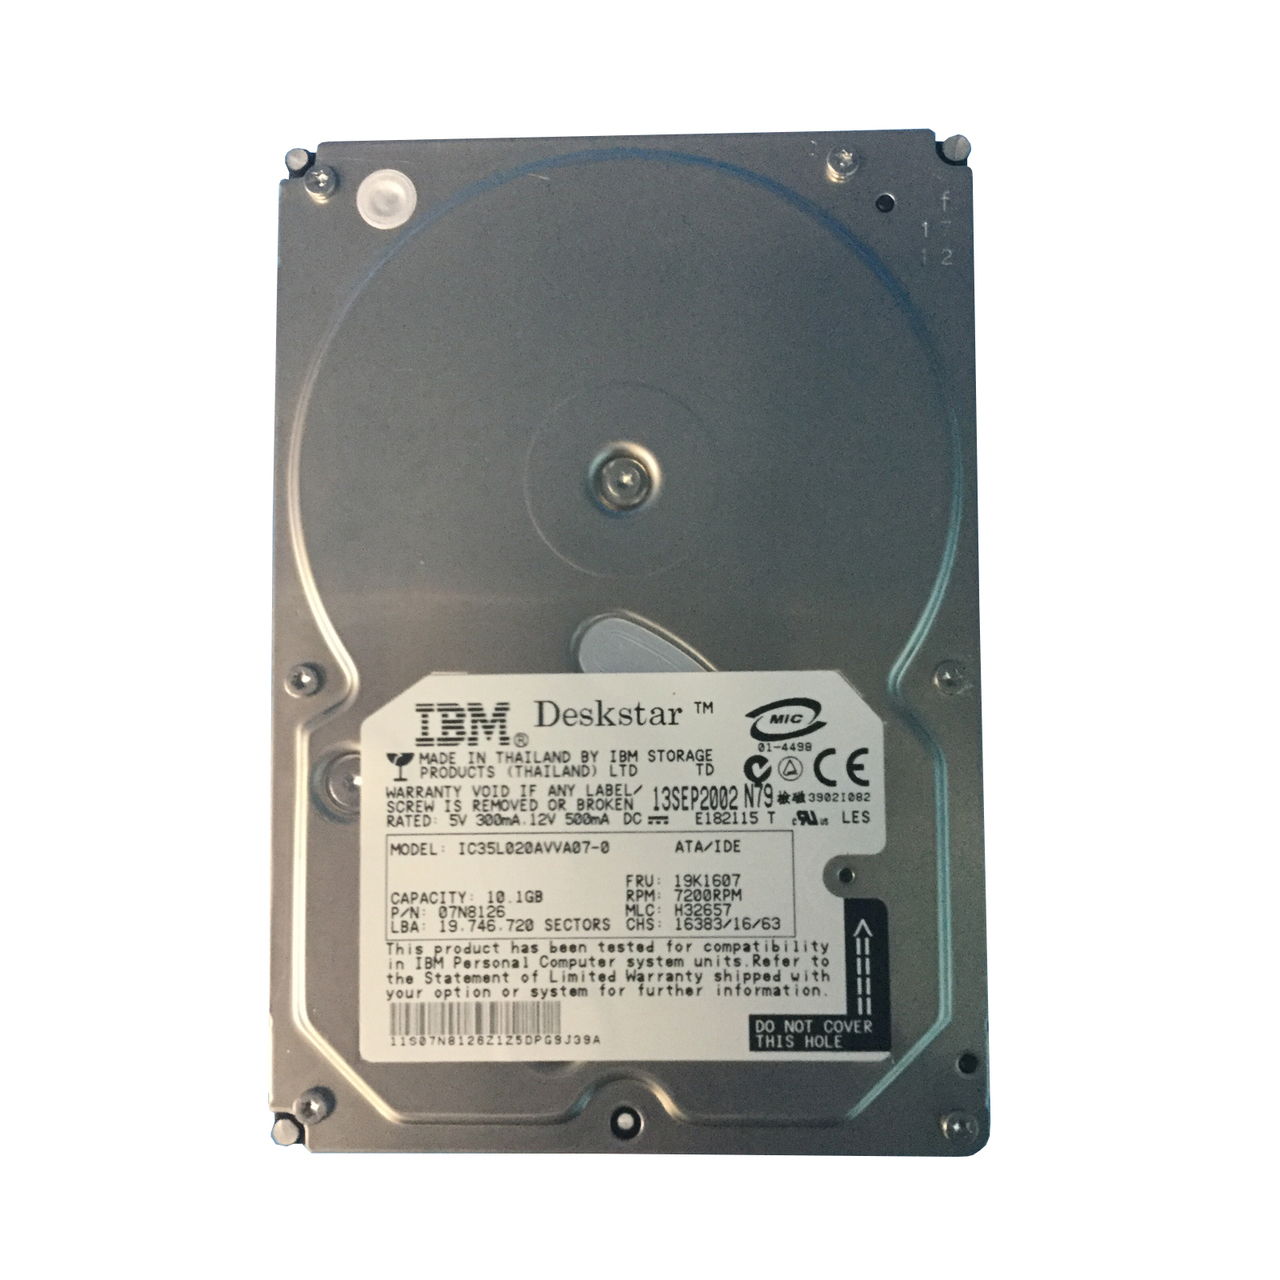 19K1607 | IBM 10GB 7200RPM IDE 3.5-inch Hard Drive